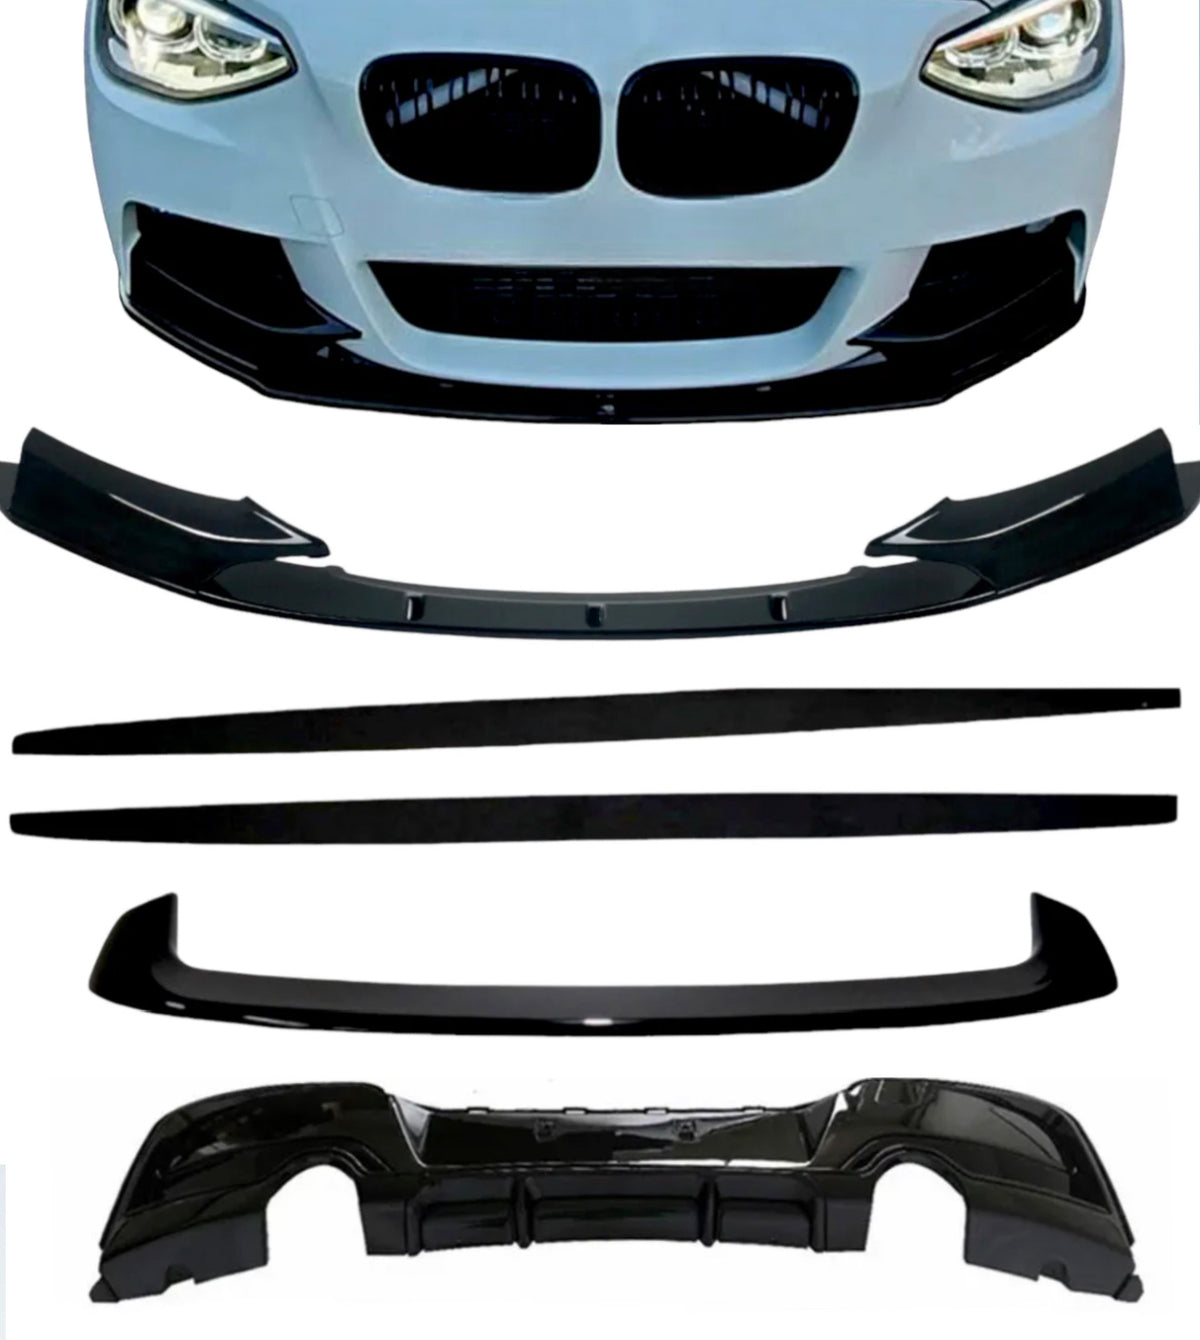 Full Body Kit - Fits BMW F20 F21 1 Series - Gloss Black Dual - STM STYLING 